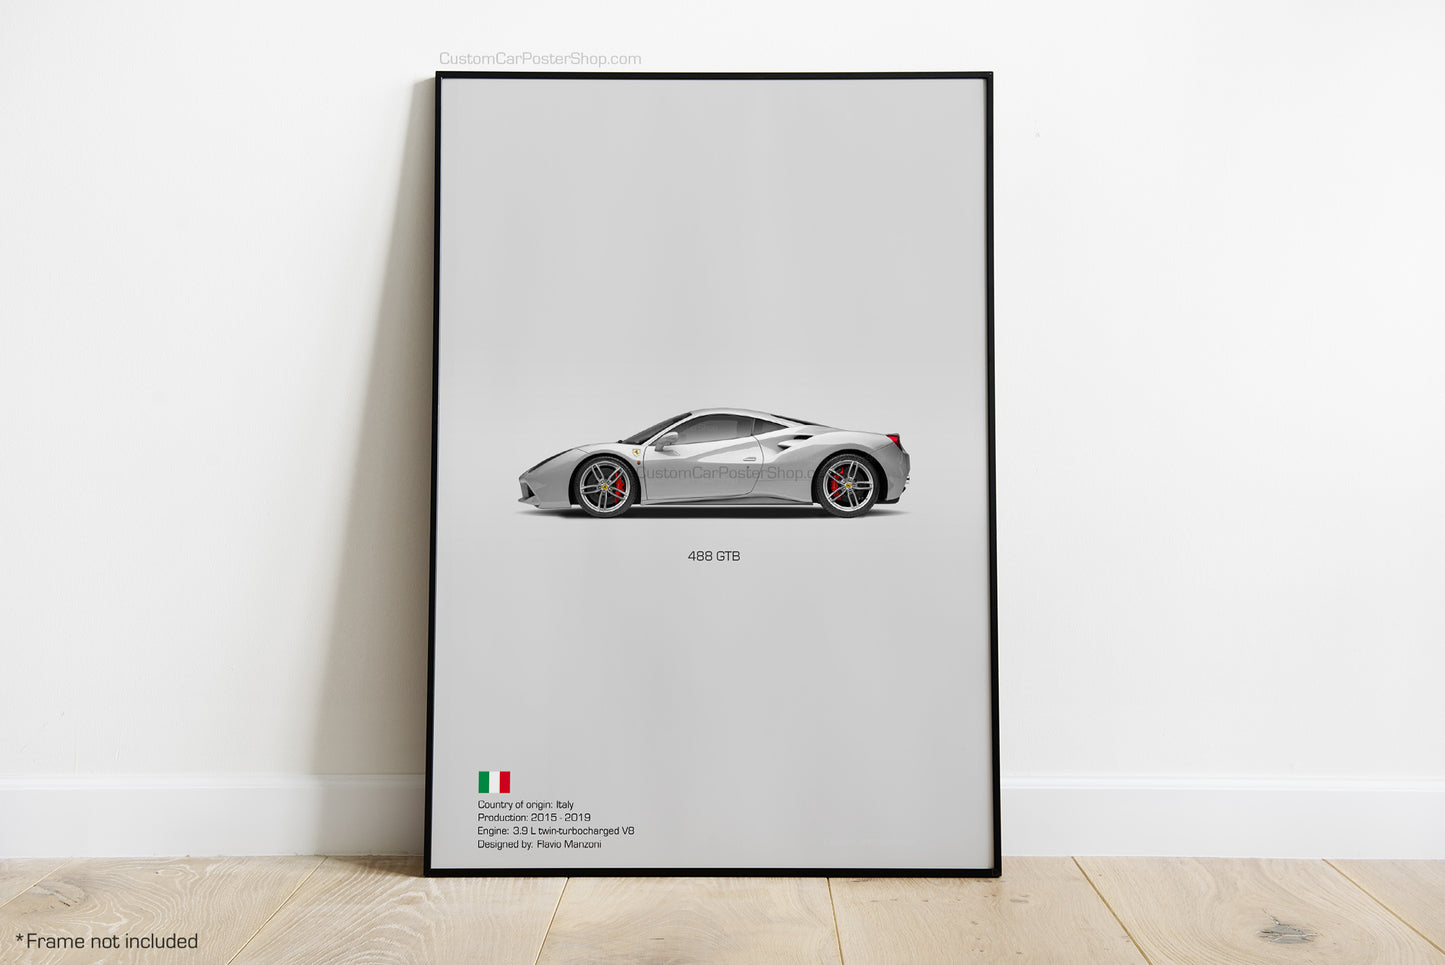 Ferrari 488 GTB Poster - Wall Decor Wall Art